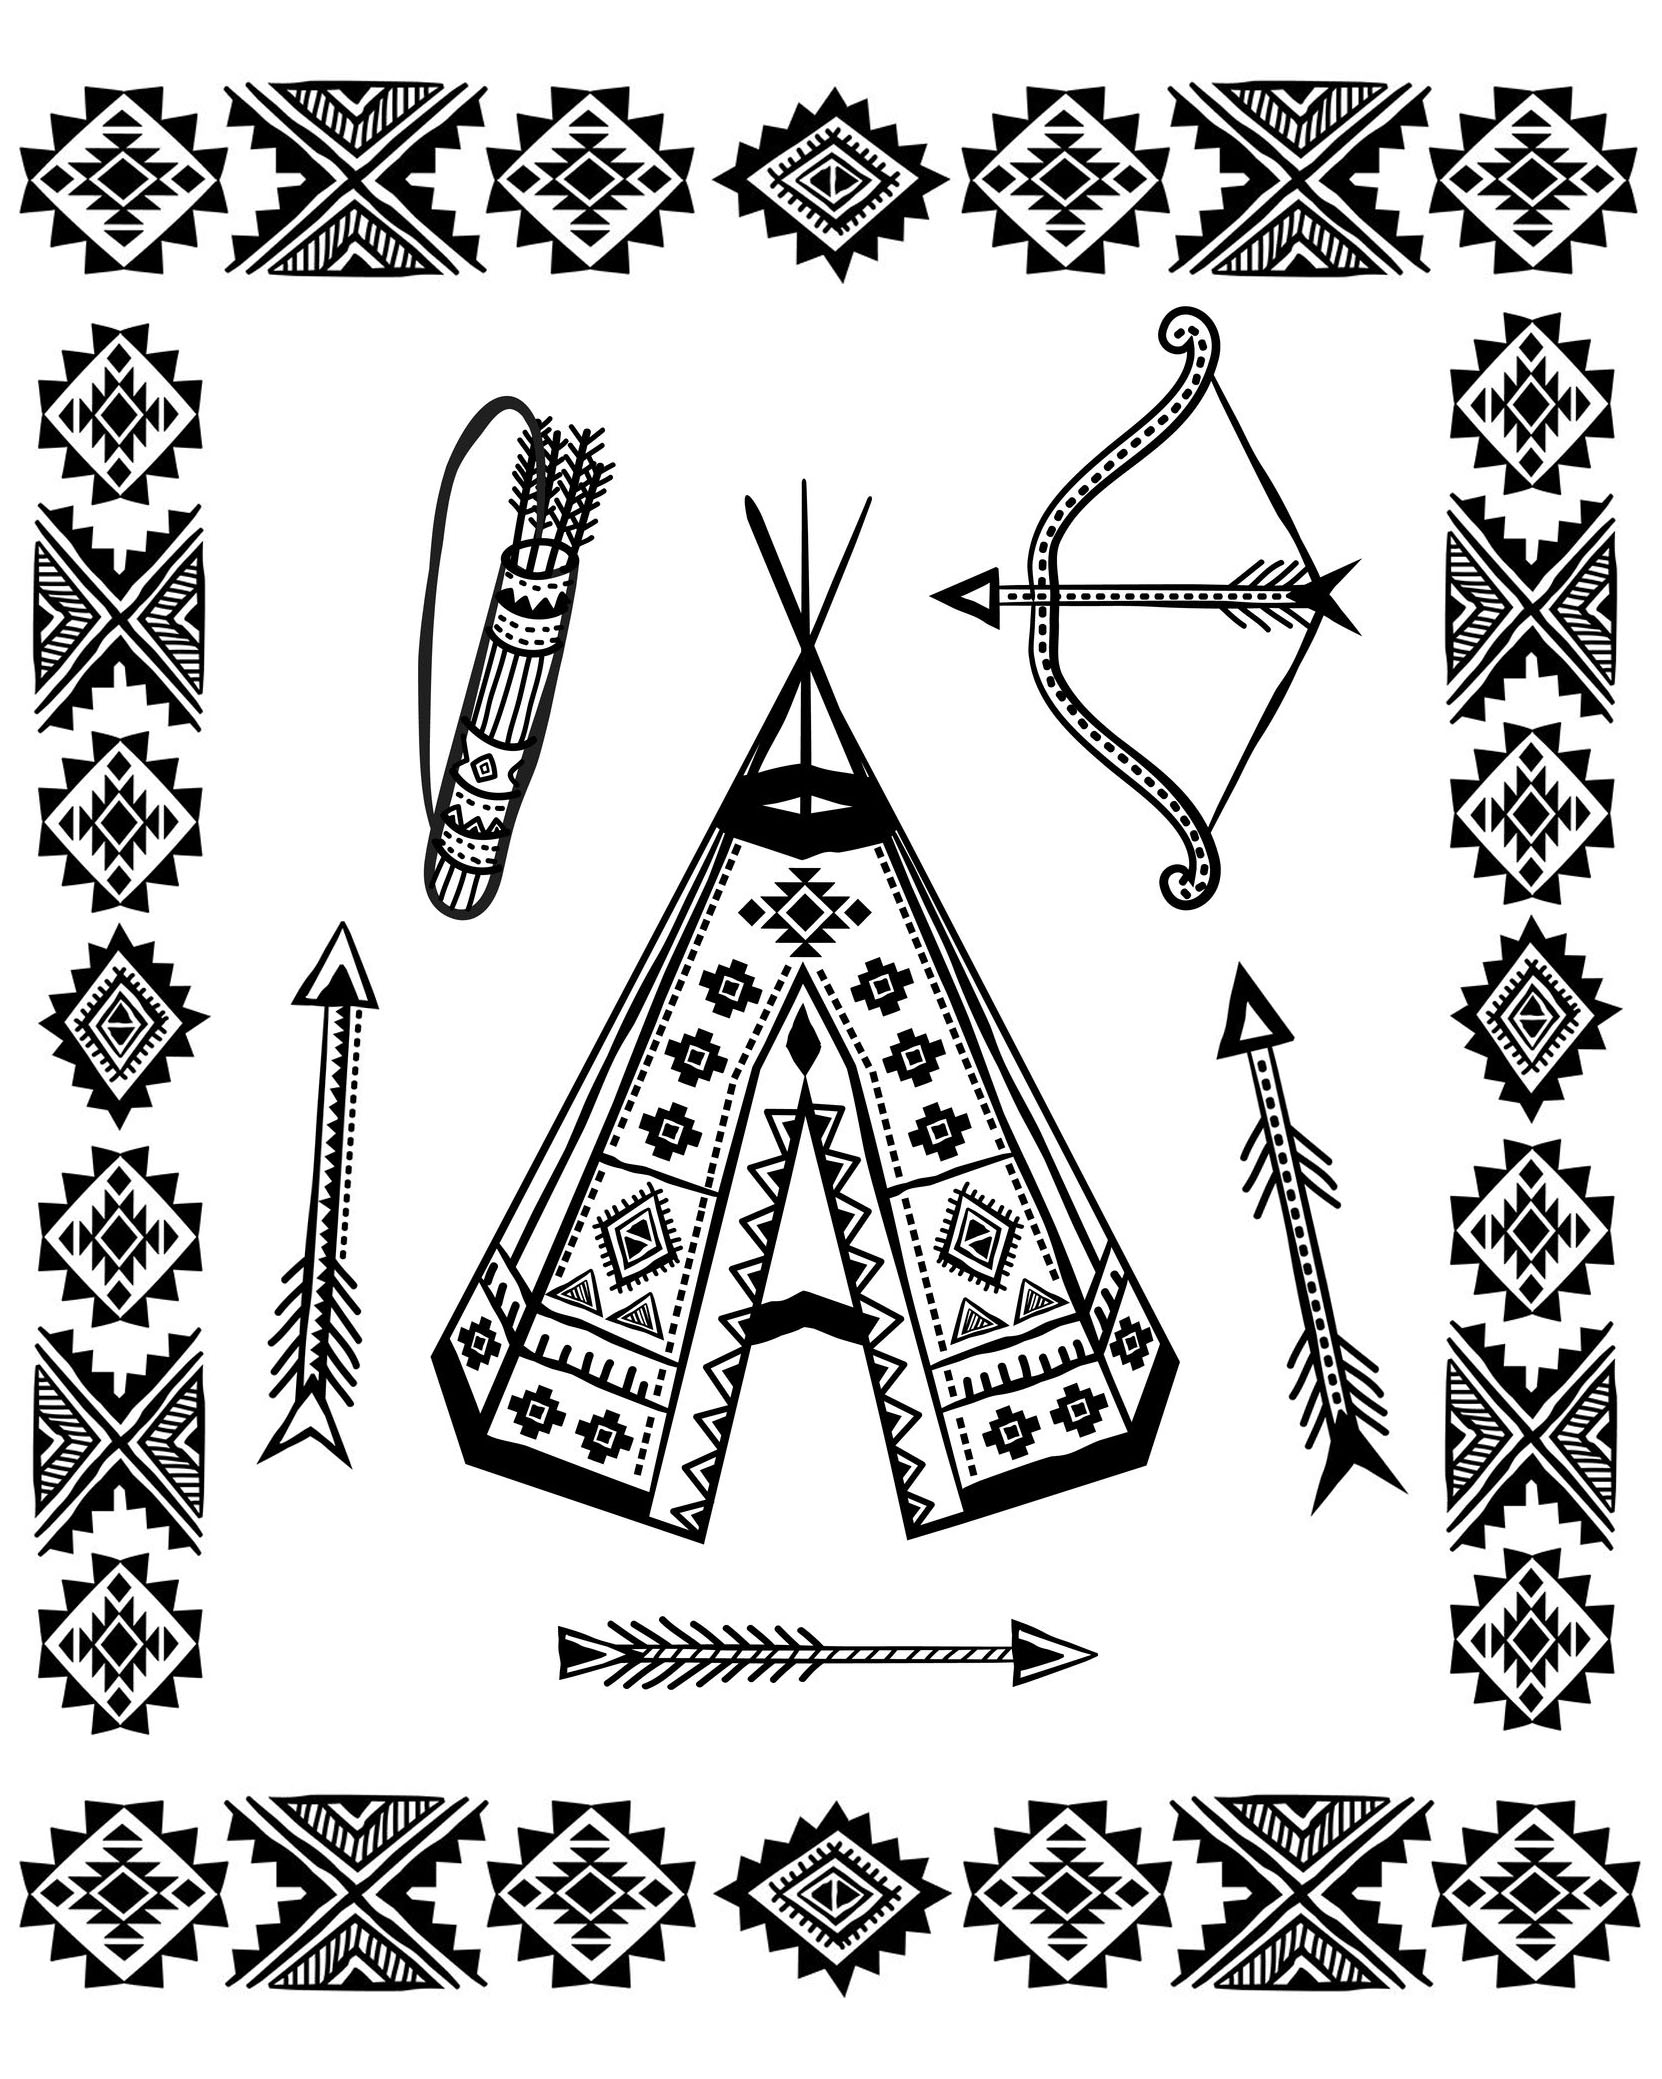 Native american tipi and symbols